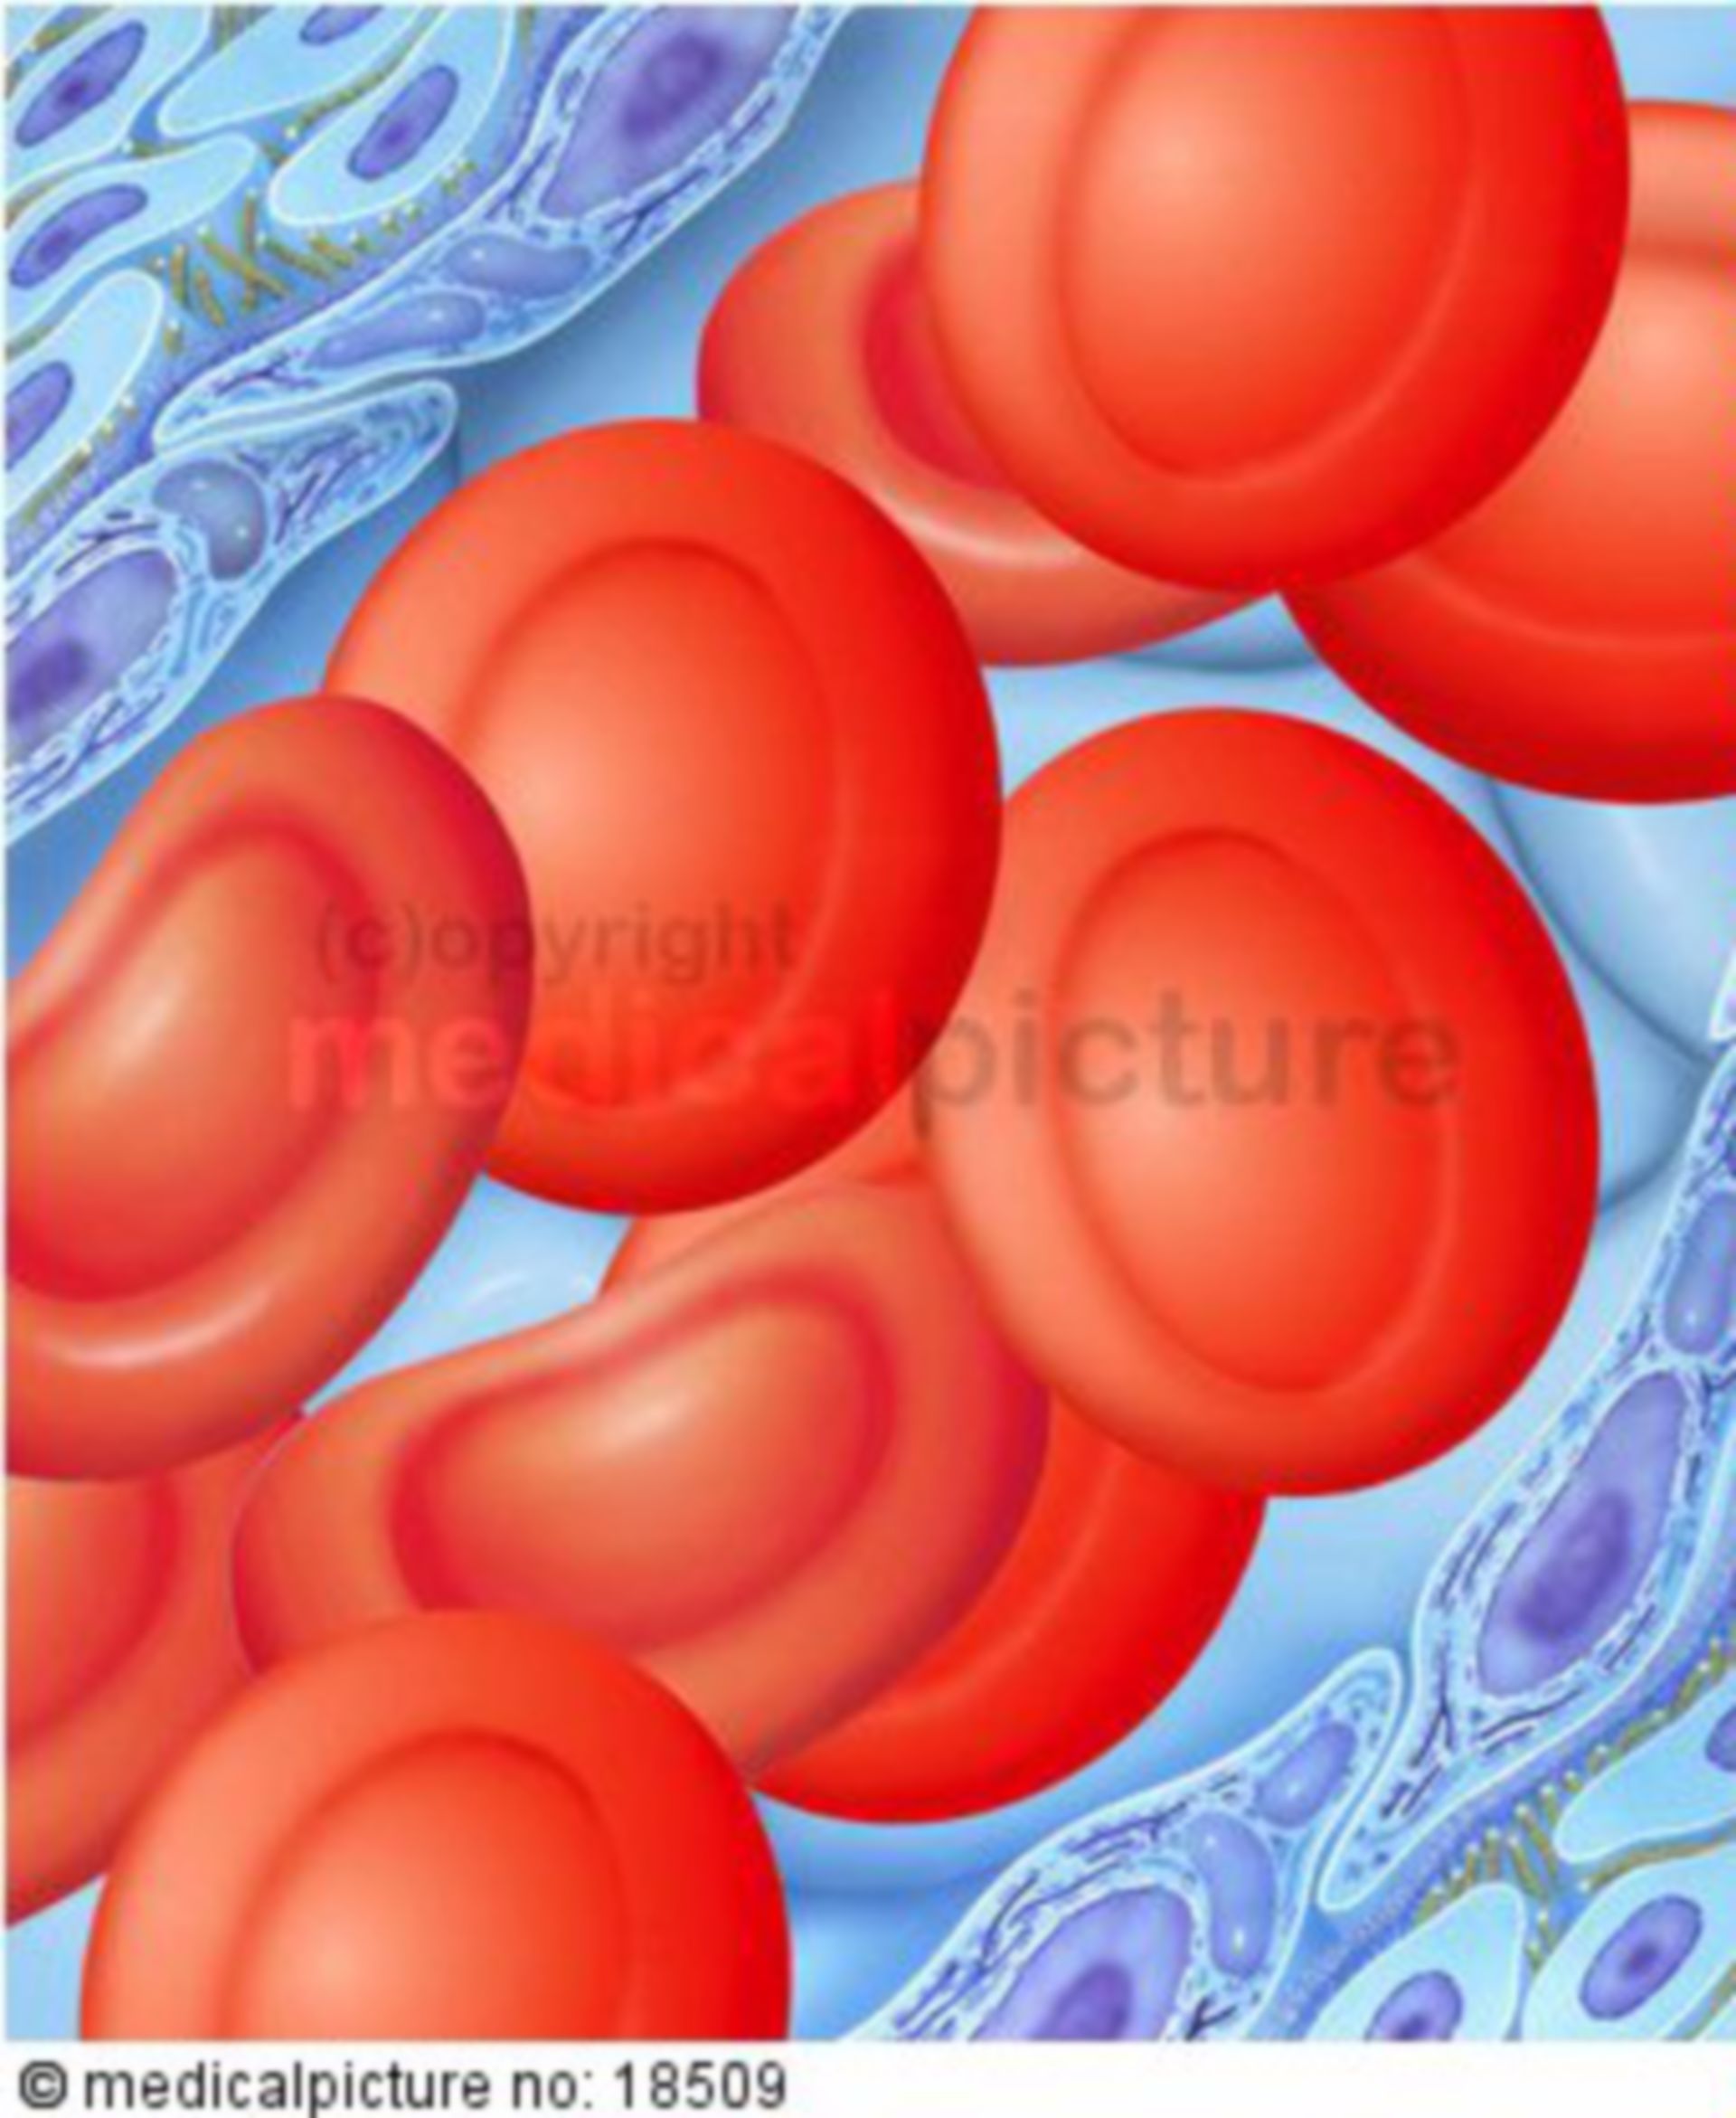 Erythrocytes, red blood cells